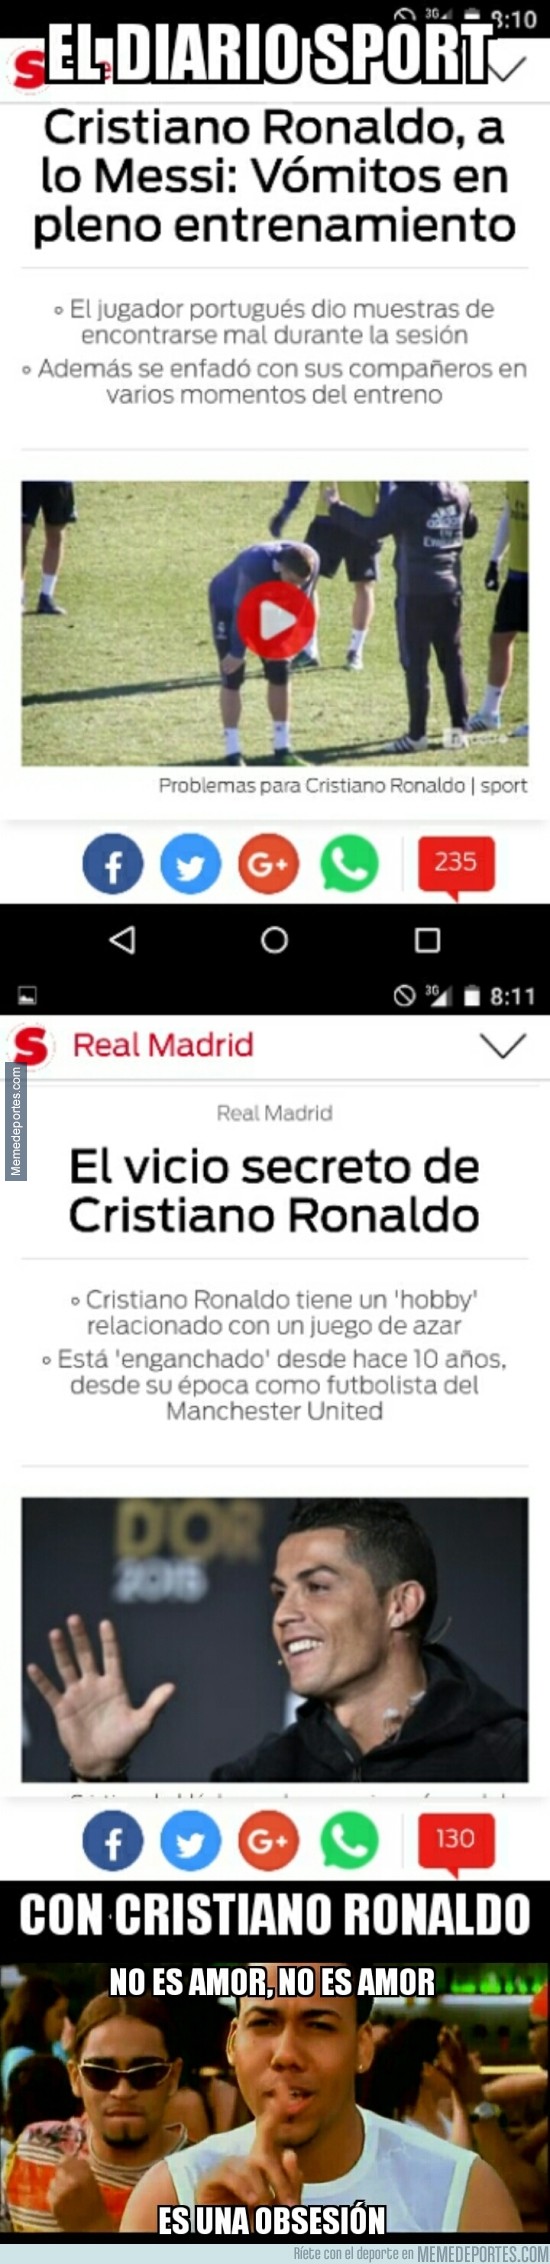 935808 - Lo de Sport con Cristiano Ronaldo empieza a ser preocupante